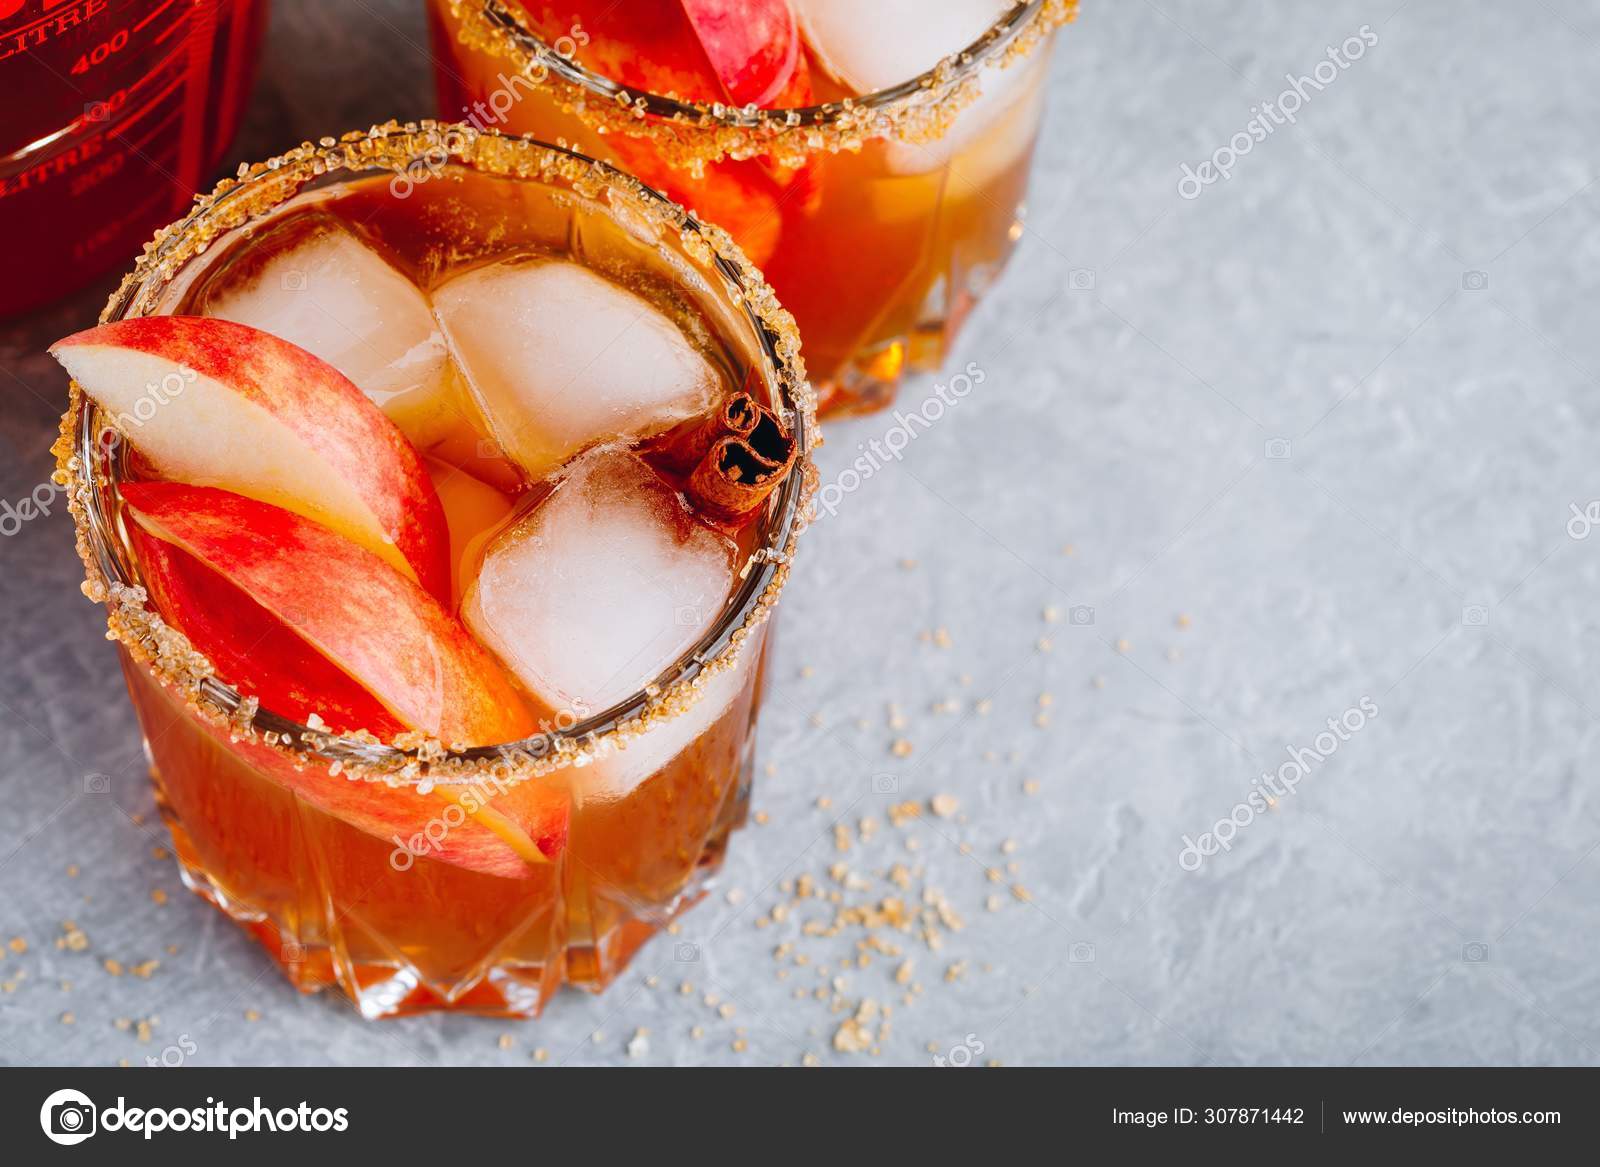 https://st4.depositphotos.com/2716431/30787/i/1600/depositphotos_307871442-stock-photo-cinnamon-apple-cider-mimosa-cocktail.jpg